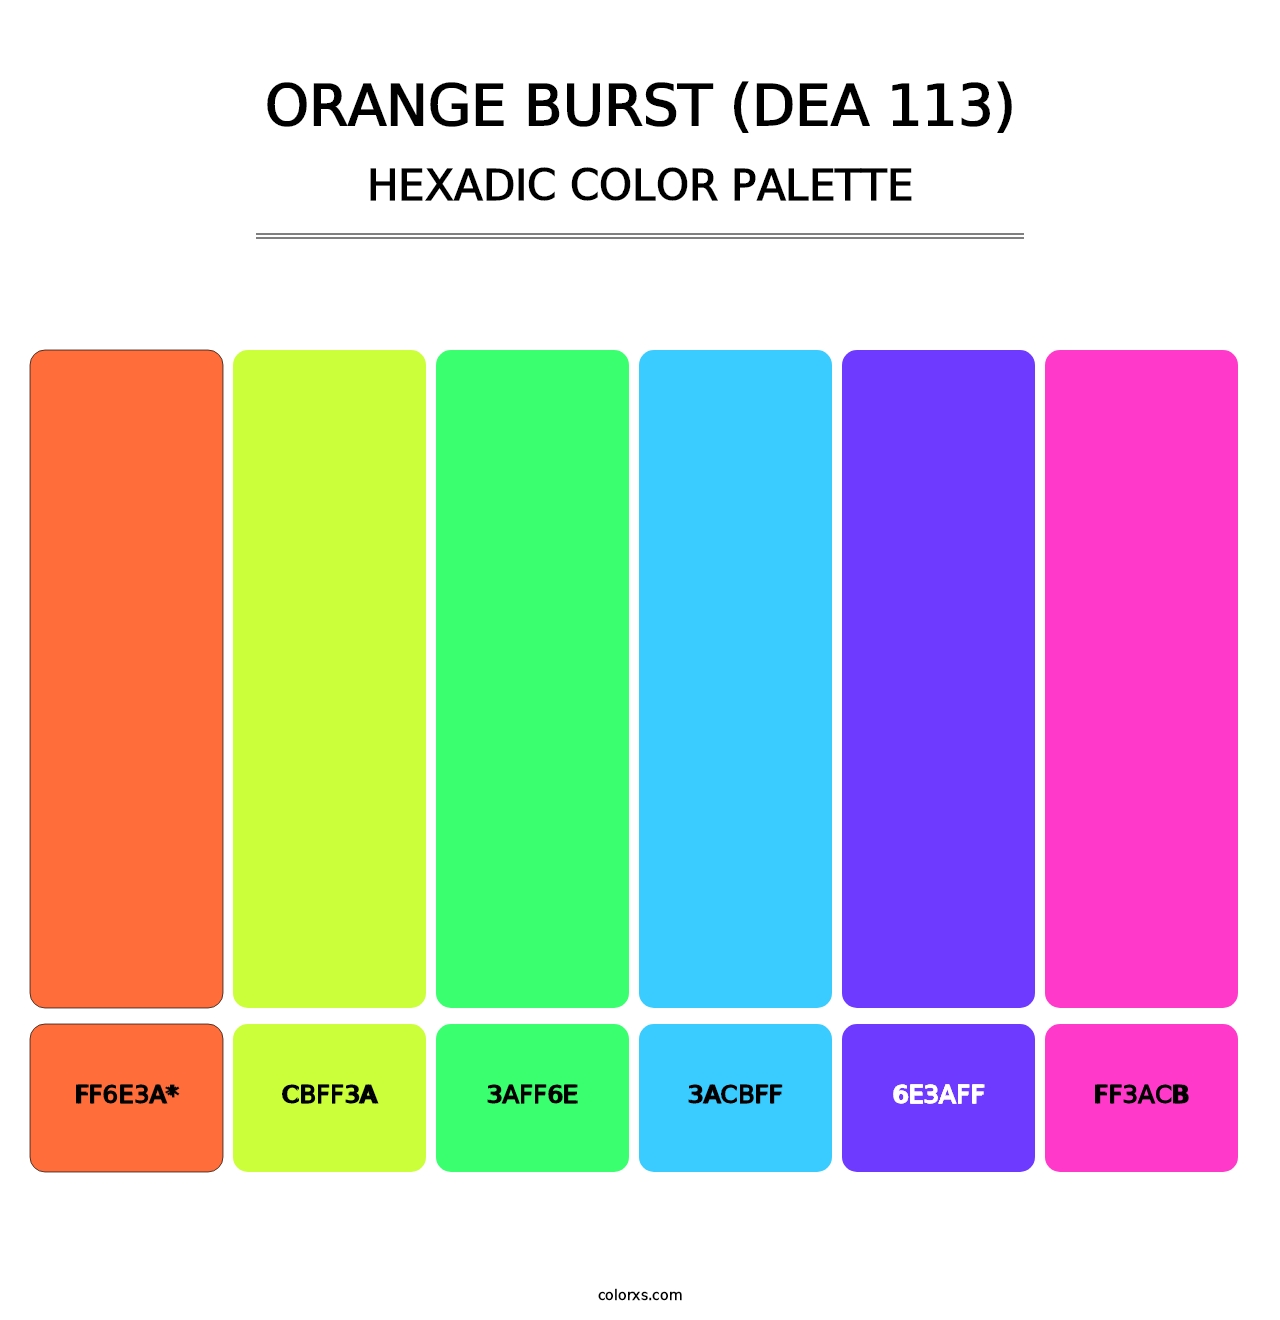 Orange Burst (DEA 113) - Hexadic Color Palette